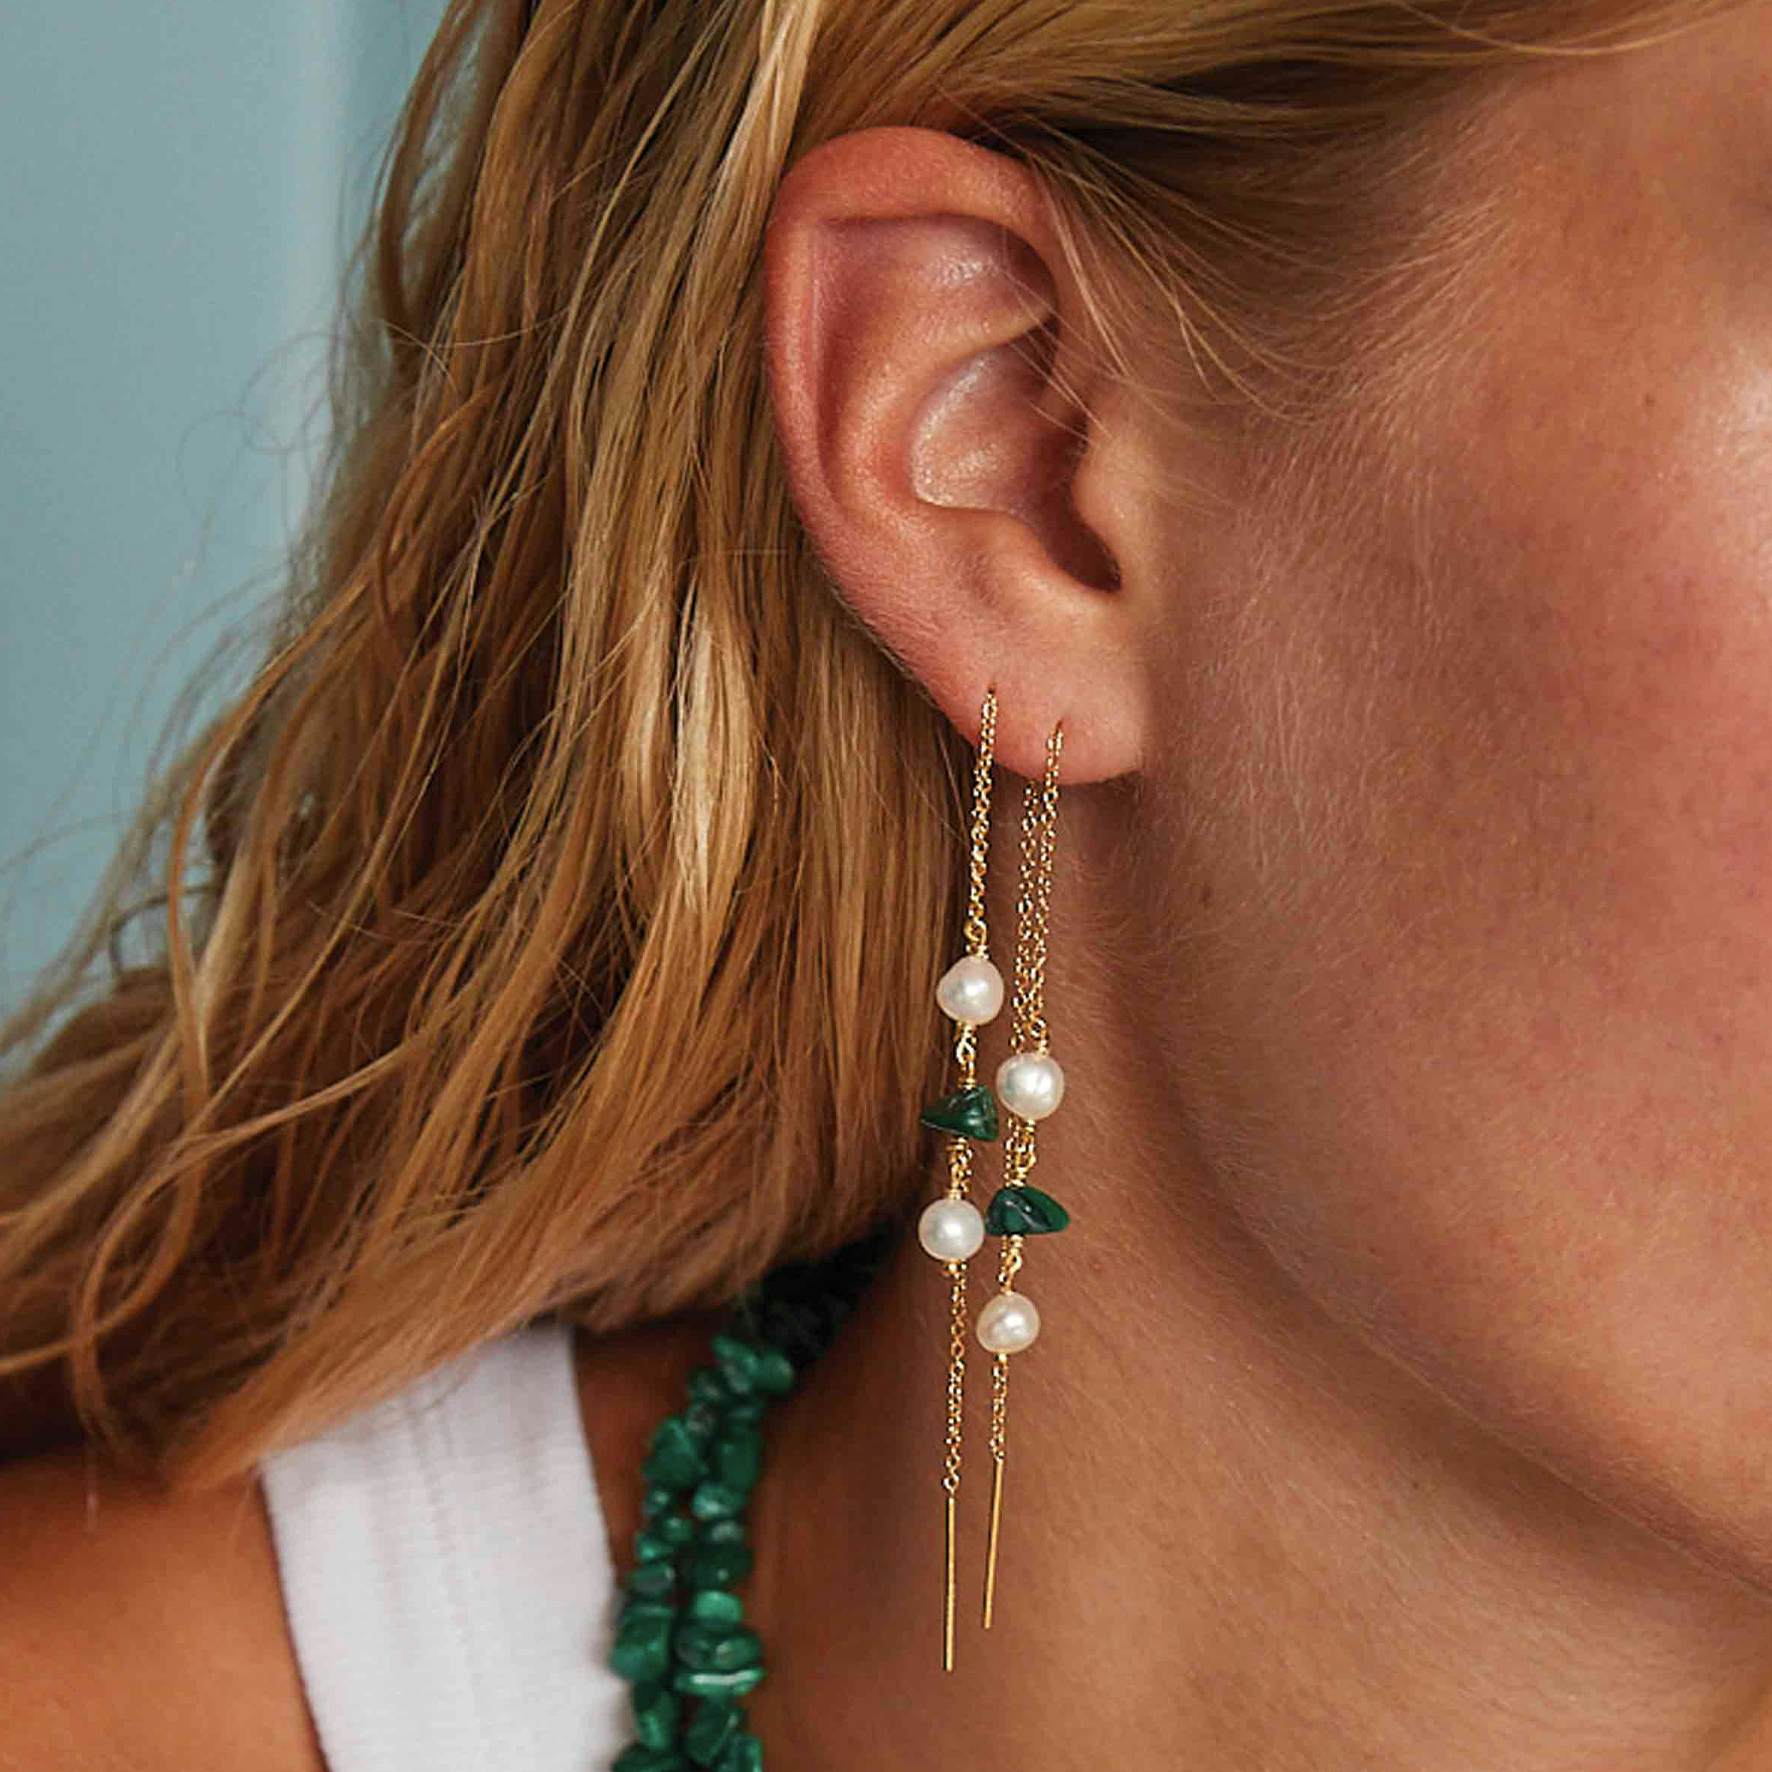 Green Ellie Earrings von Hultquist Copenhagen in Vergoldet-Silber Sterling 925| ,Freshwater Pearl|Blank